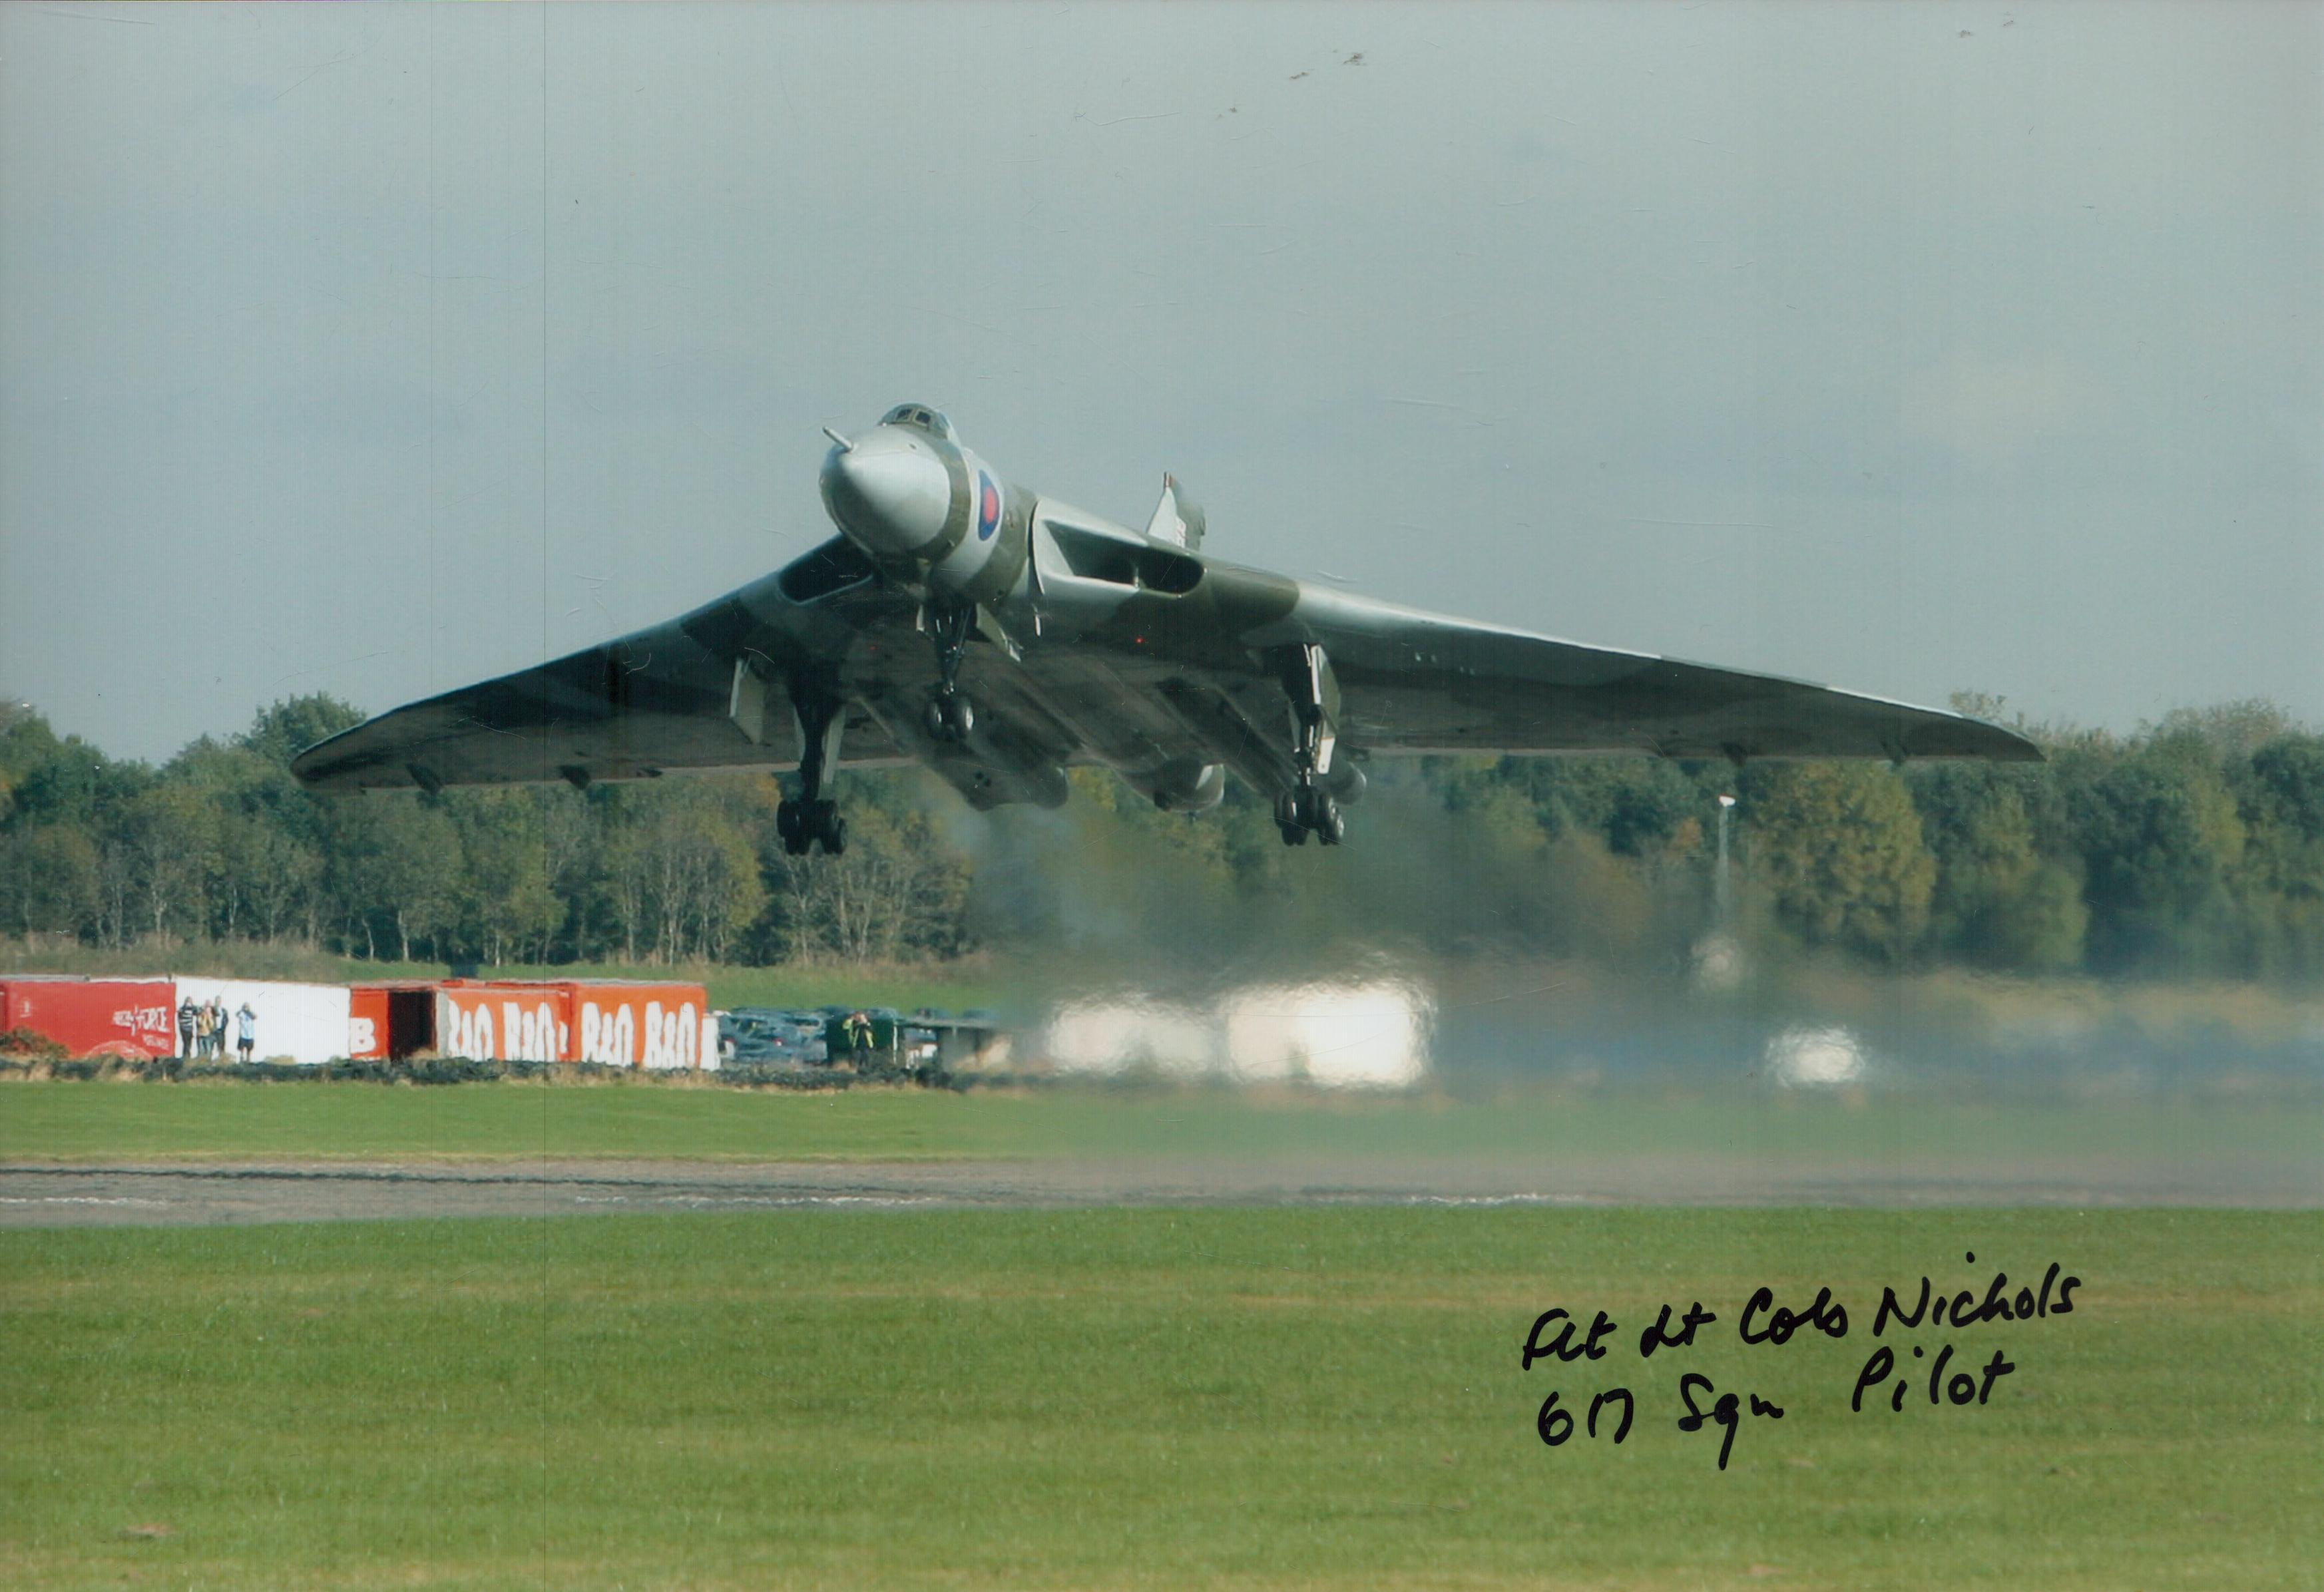 Flt Lt Colston Nichols RAF 617 Squadron Vulcan Bomber Pilot signed photo. Good Condition. All